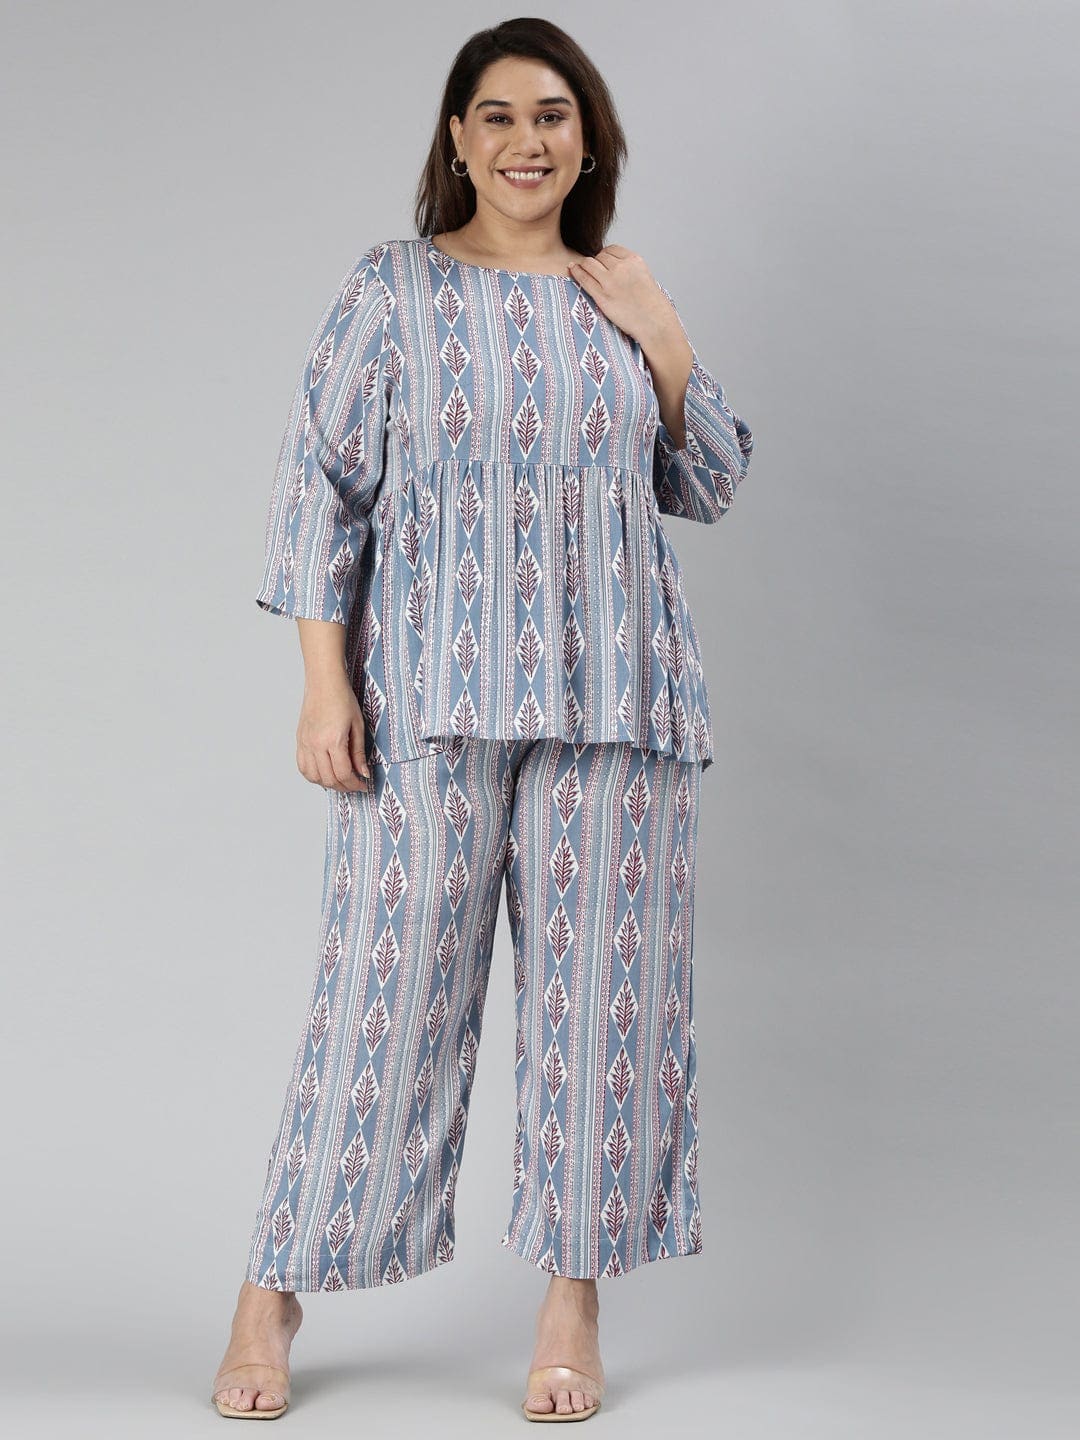 Buy  peplum dress /Women's /Blue ethnic printed /peplum top /palazzo pant on online from the Shaili